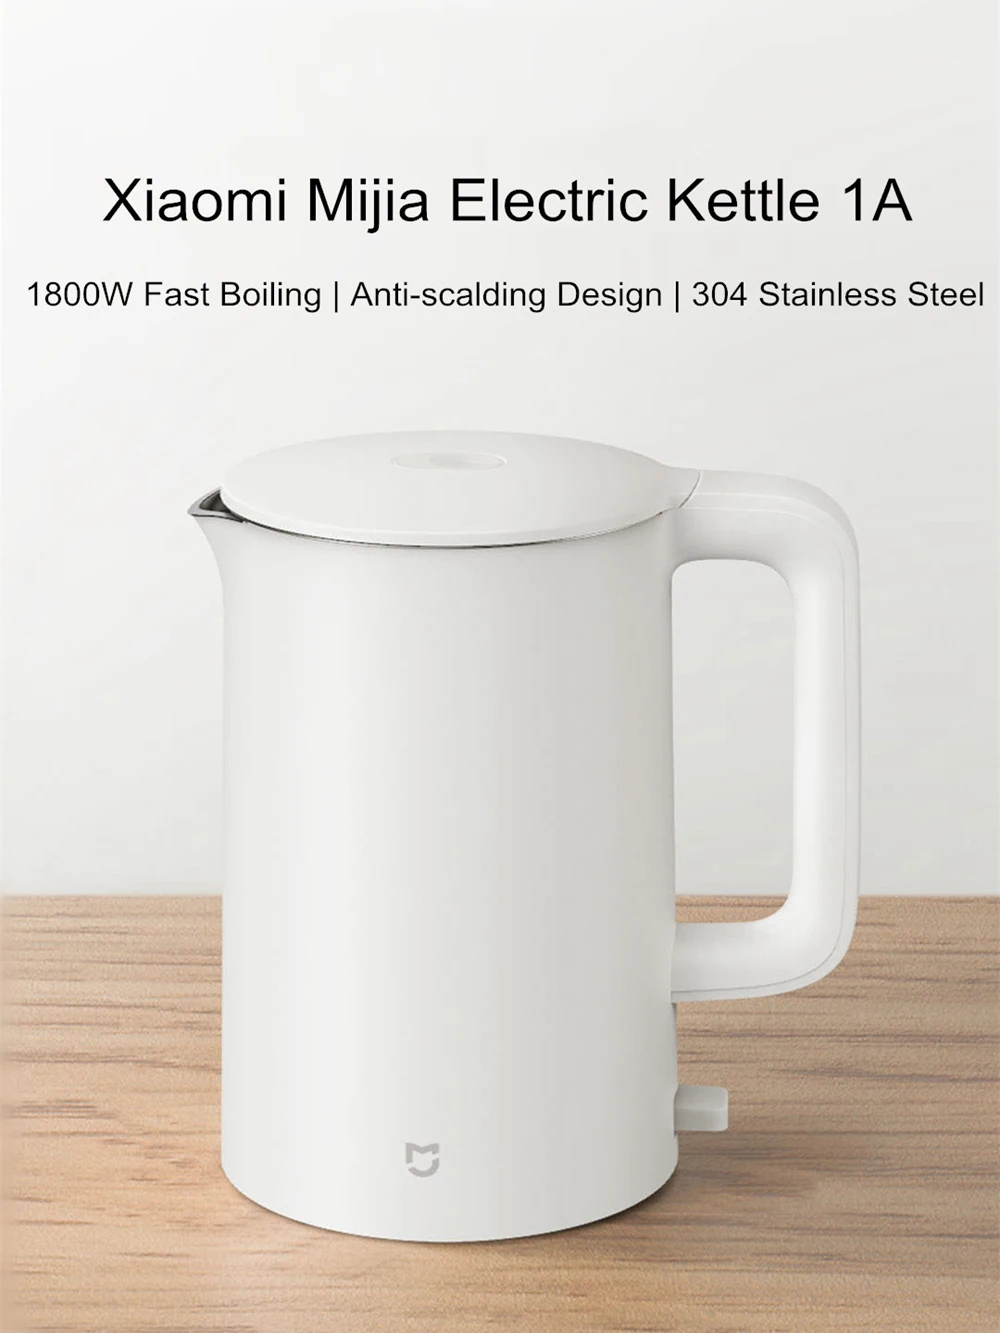 Электрический Чайник Xiaomi Mi Electric Kettle White